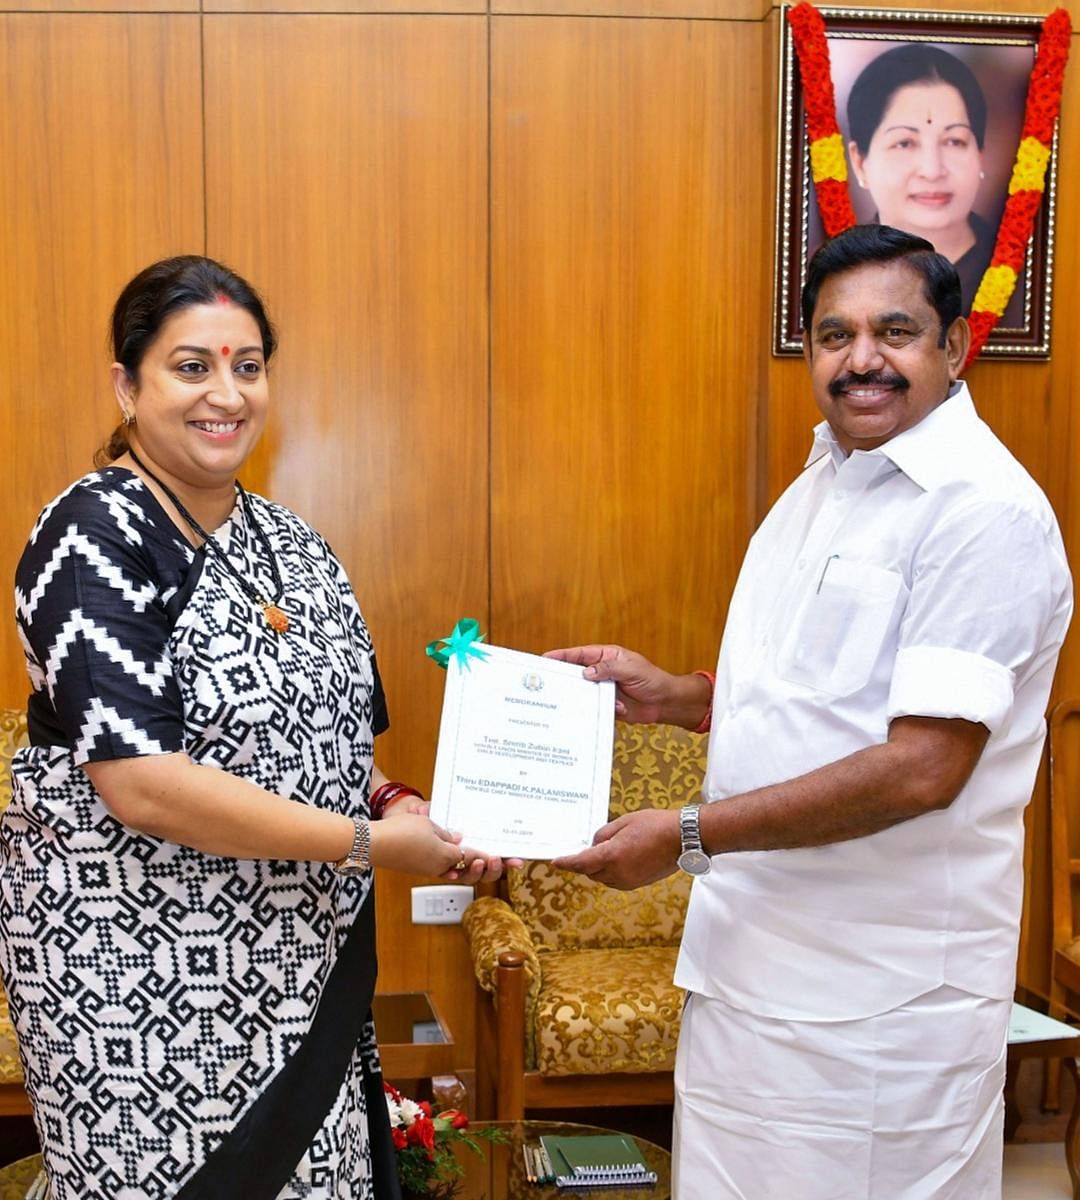 Tamil Nadu Chief Minister K Palaniswami presents a memorandum to Union Minister of Women and Child development and Textiles Smriti Irani, at the Secretariat in Chennai, Tuesday, Nov. 12, 2019. (PTI Photo)